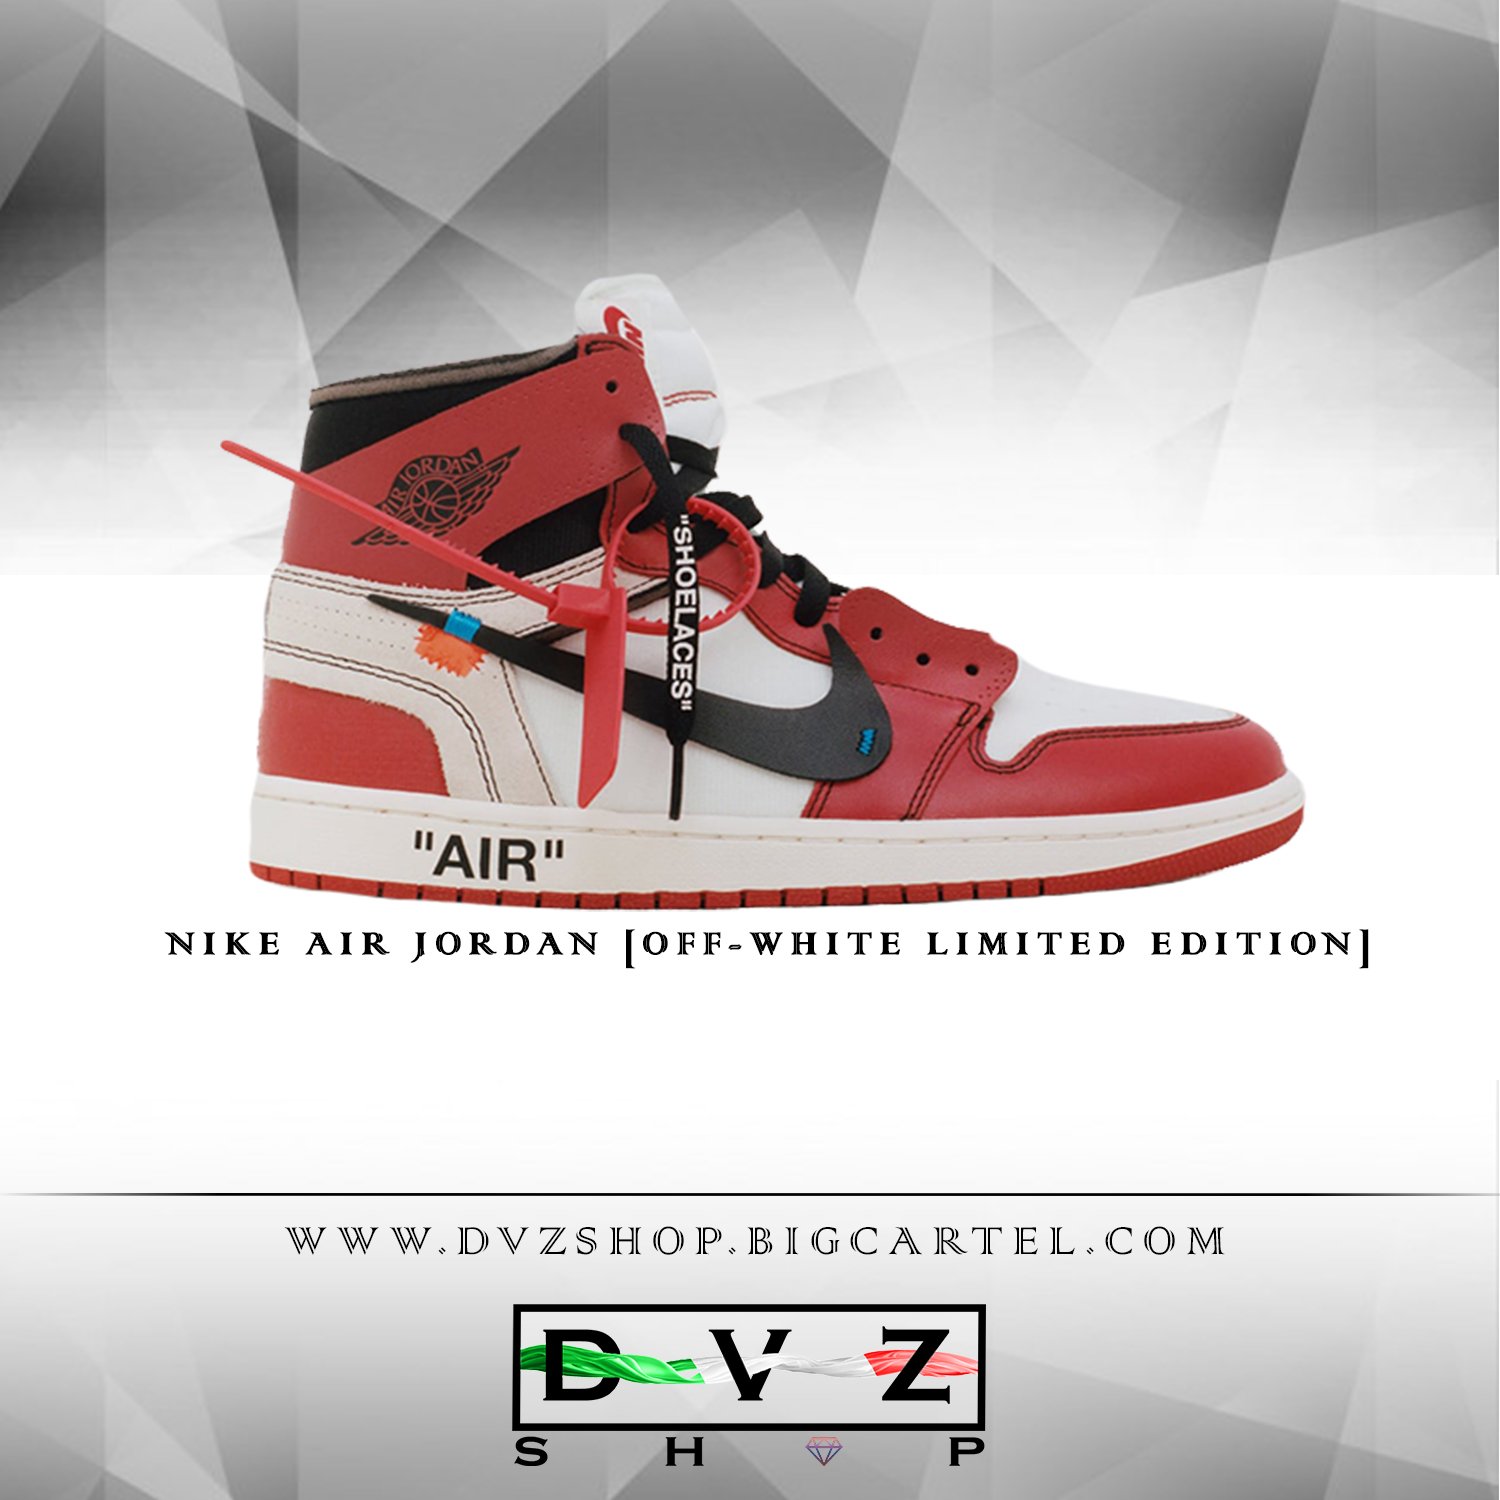 NIKE AIR JORDAN [OFF-WHITE Limited Edition] | DVZ shop